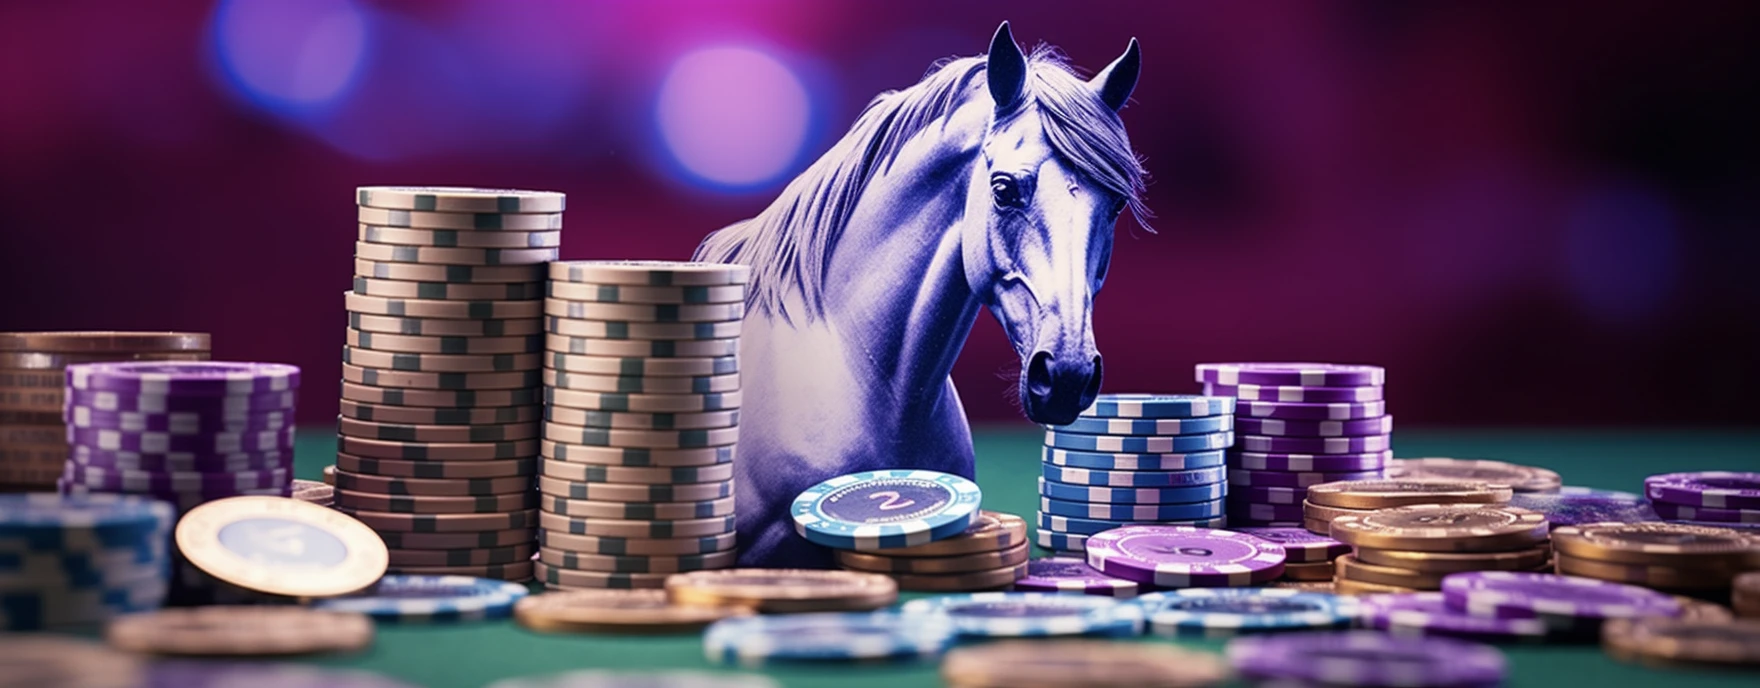 Vermont horse betting